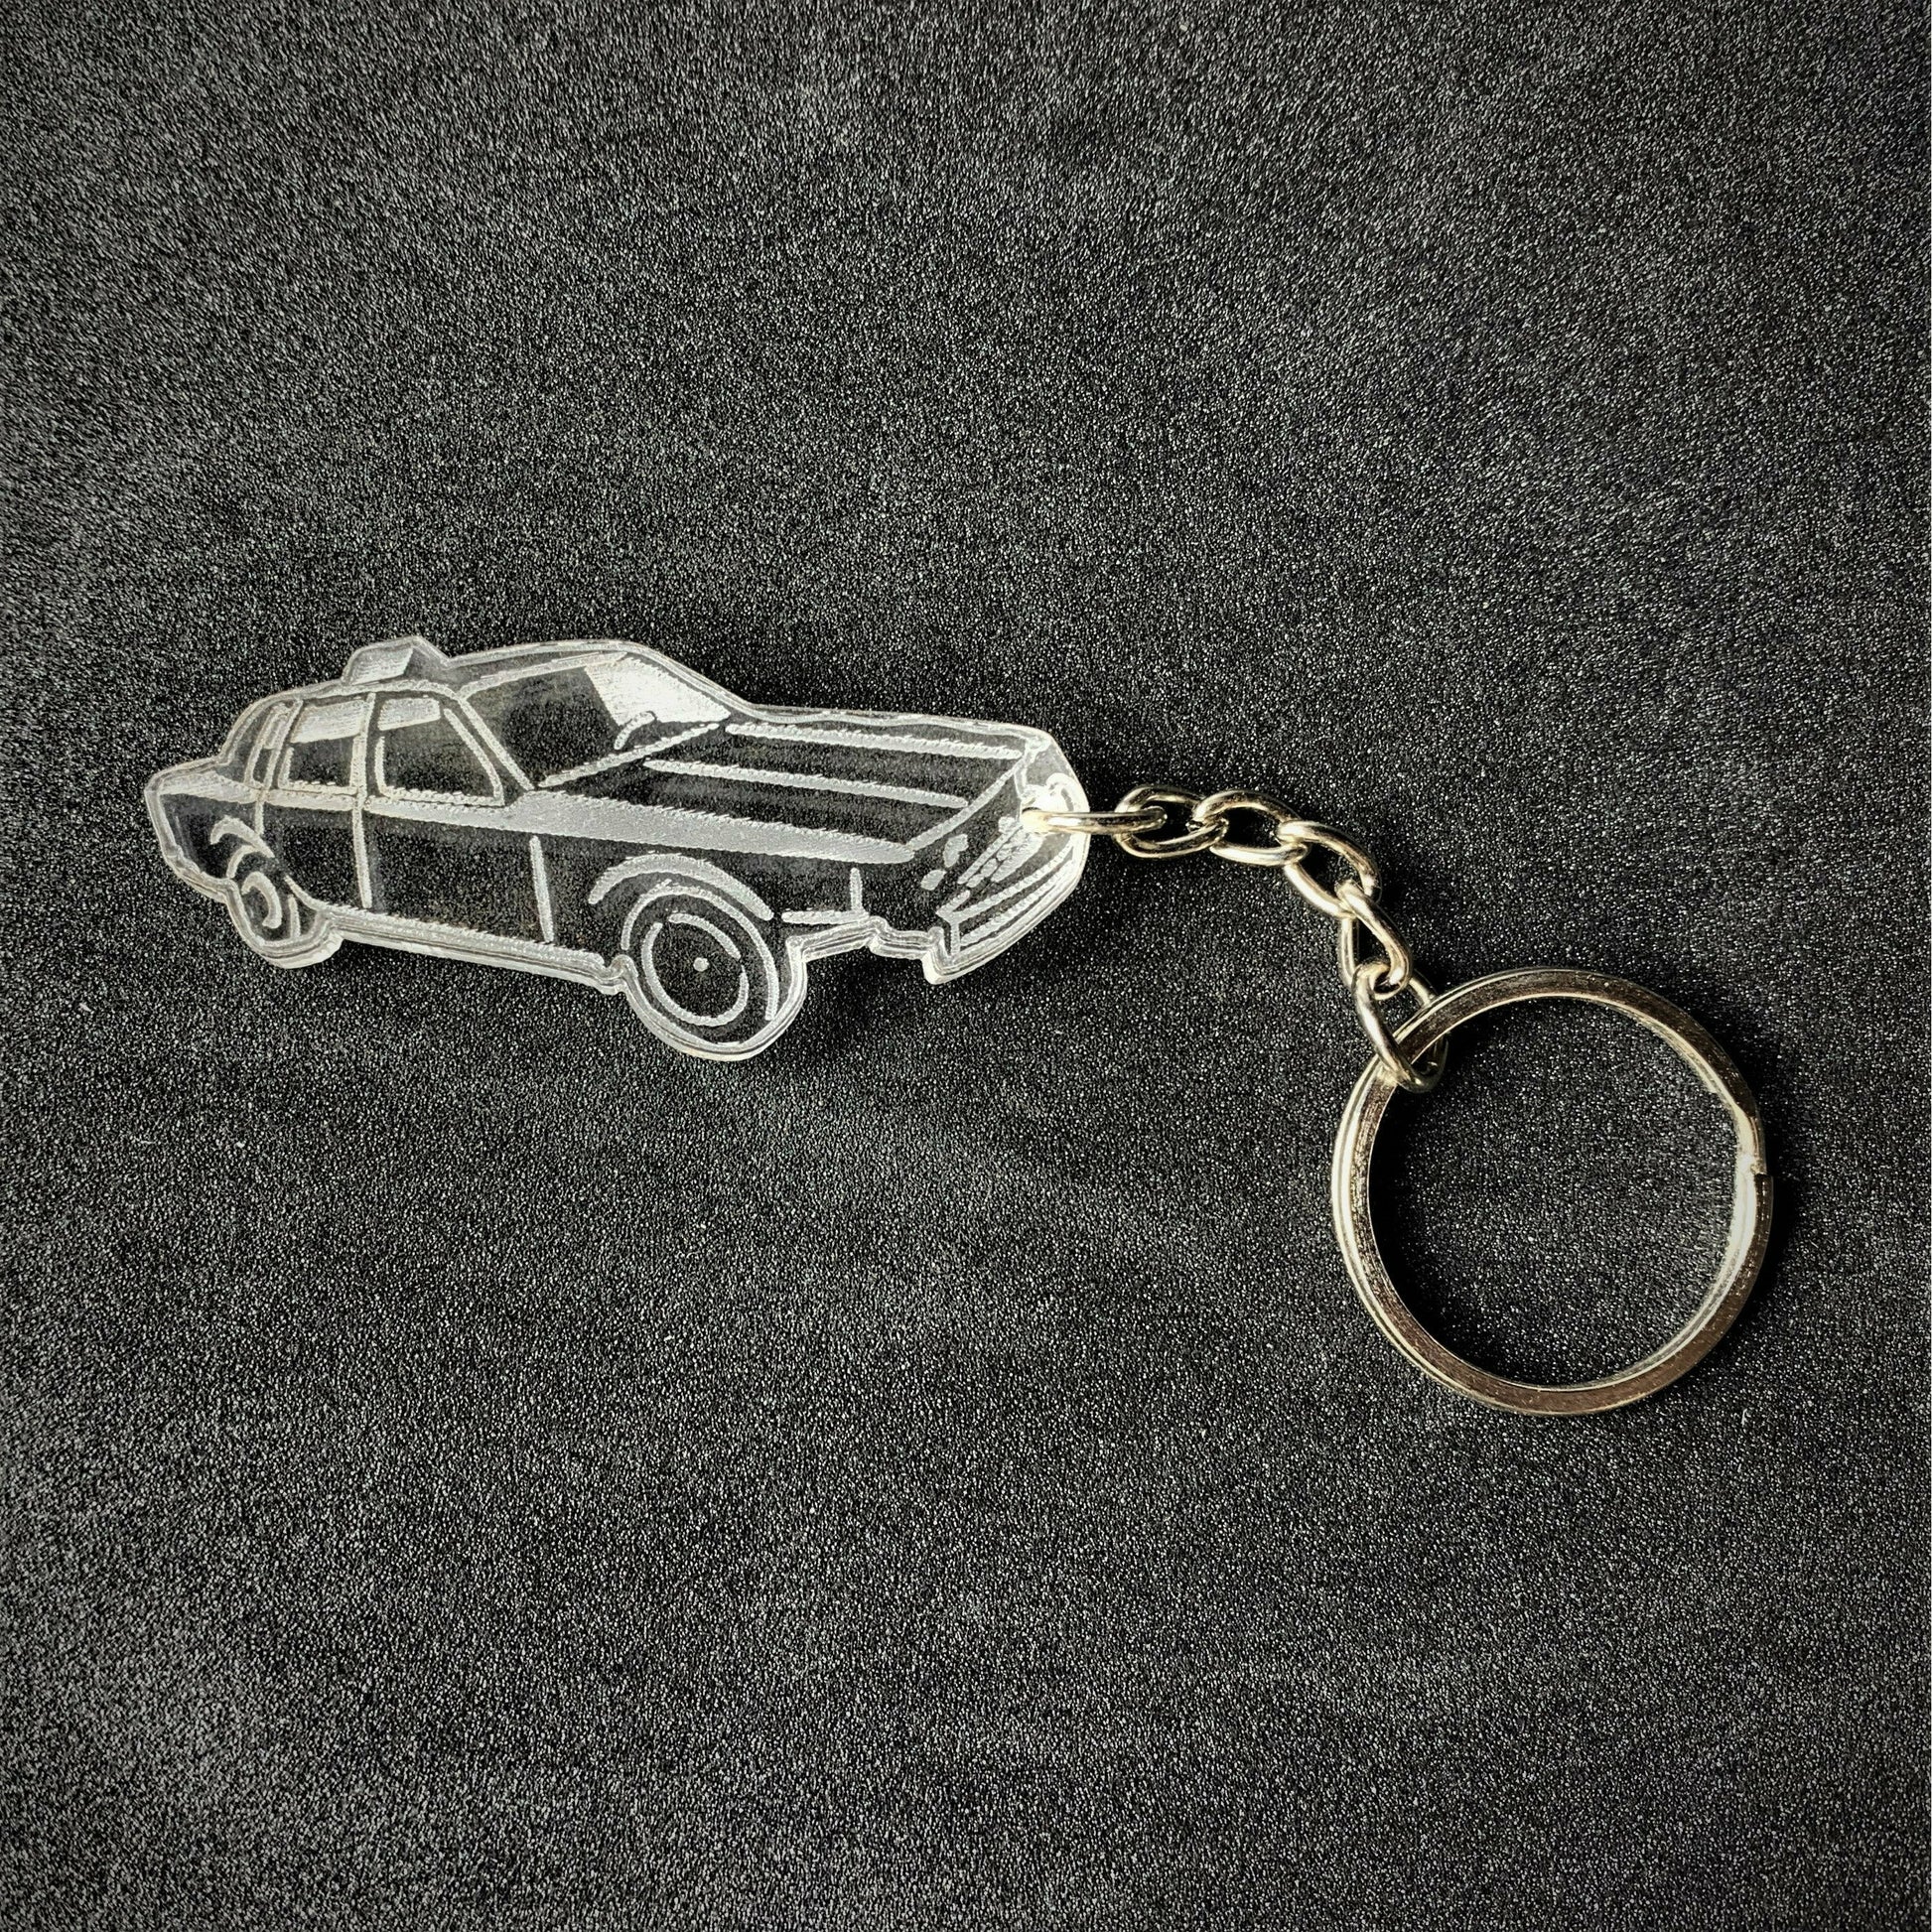 Volvo Banger Key Ring - Key Ring - Stock Car & Banger Toy Tracks